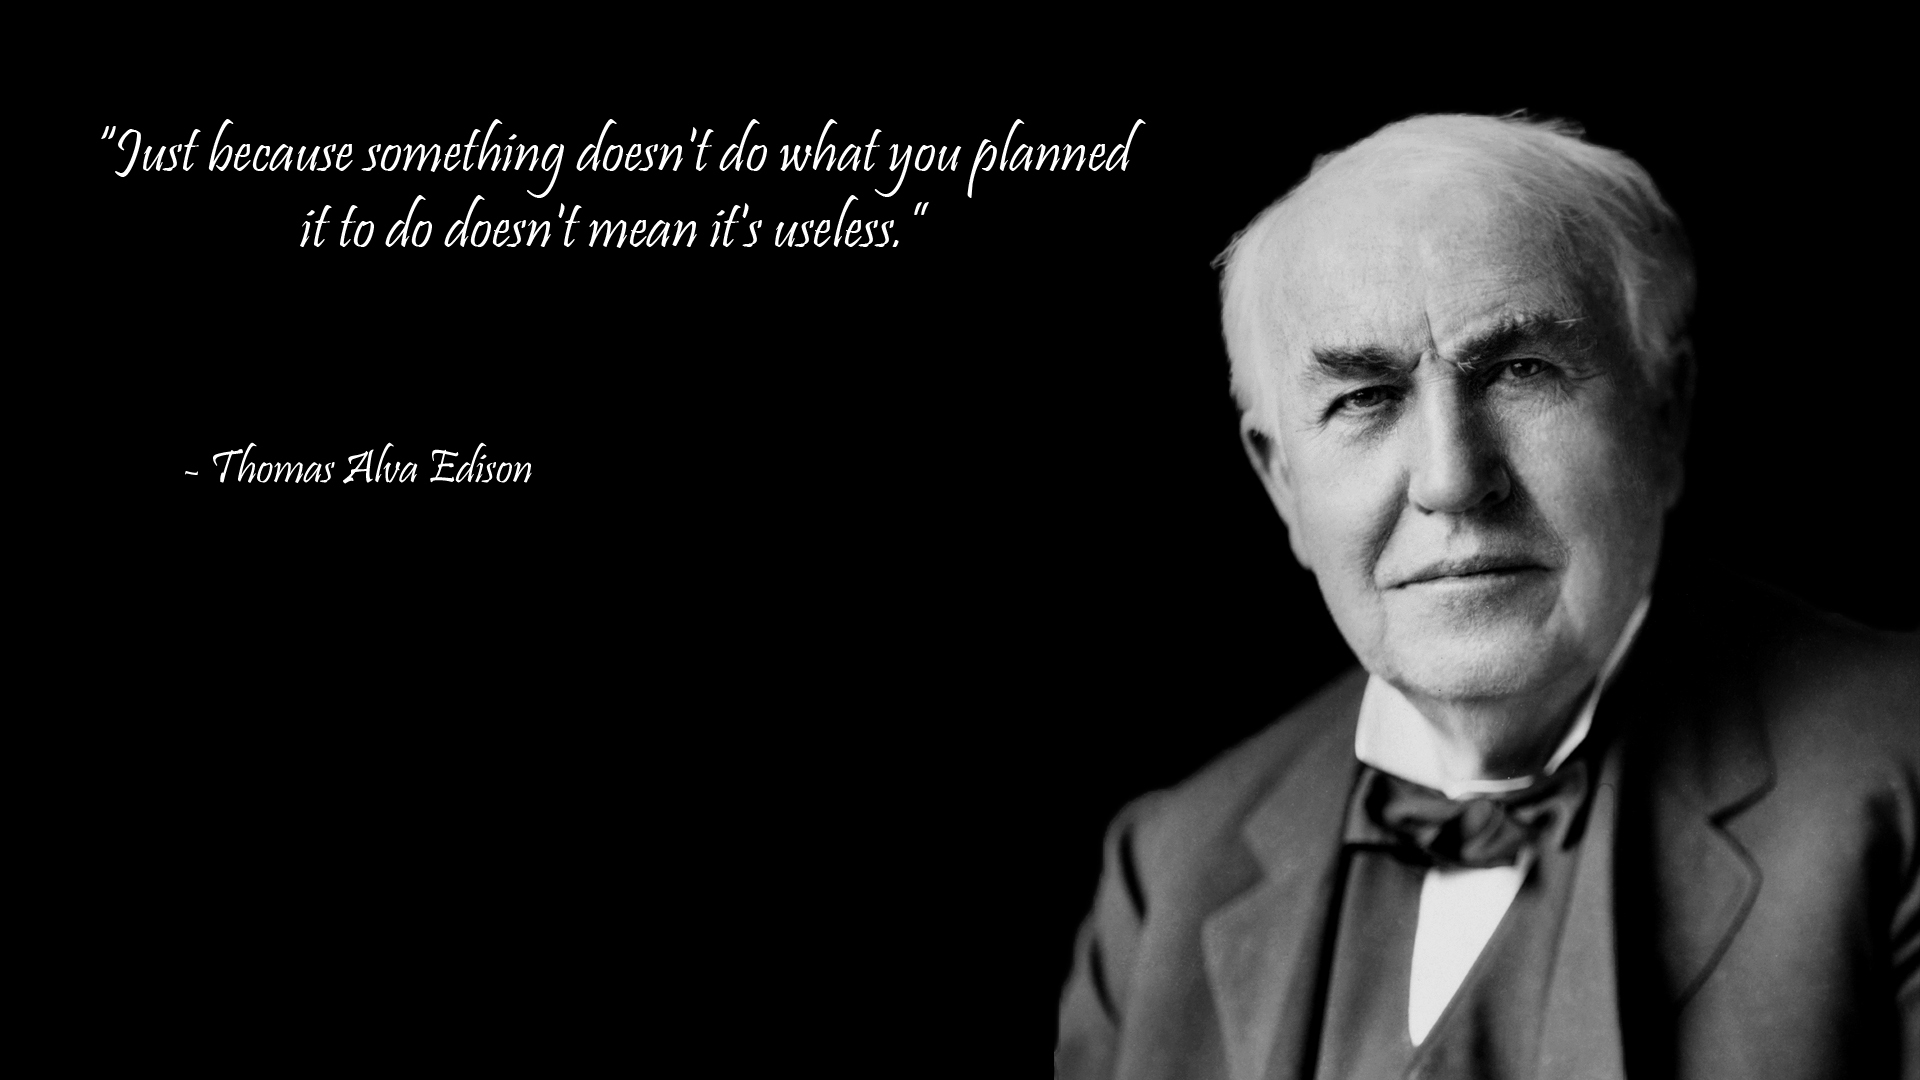 Thomas A. Edison's quote #4